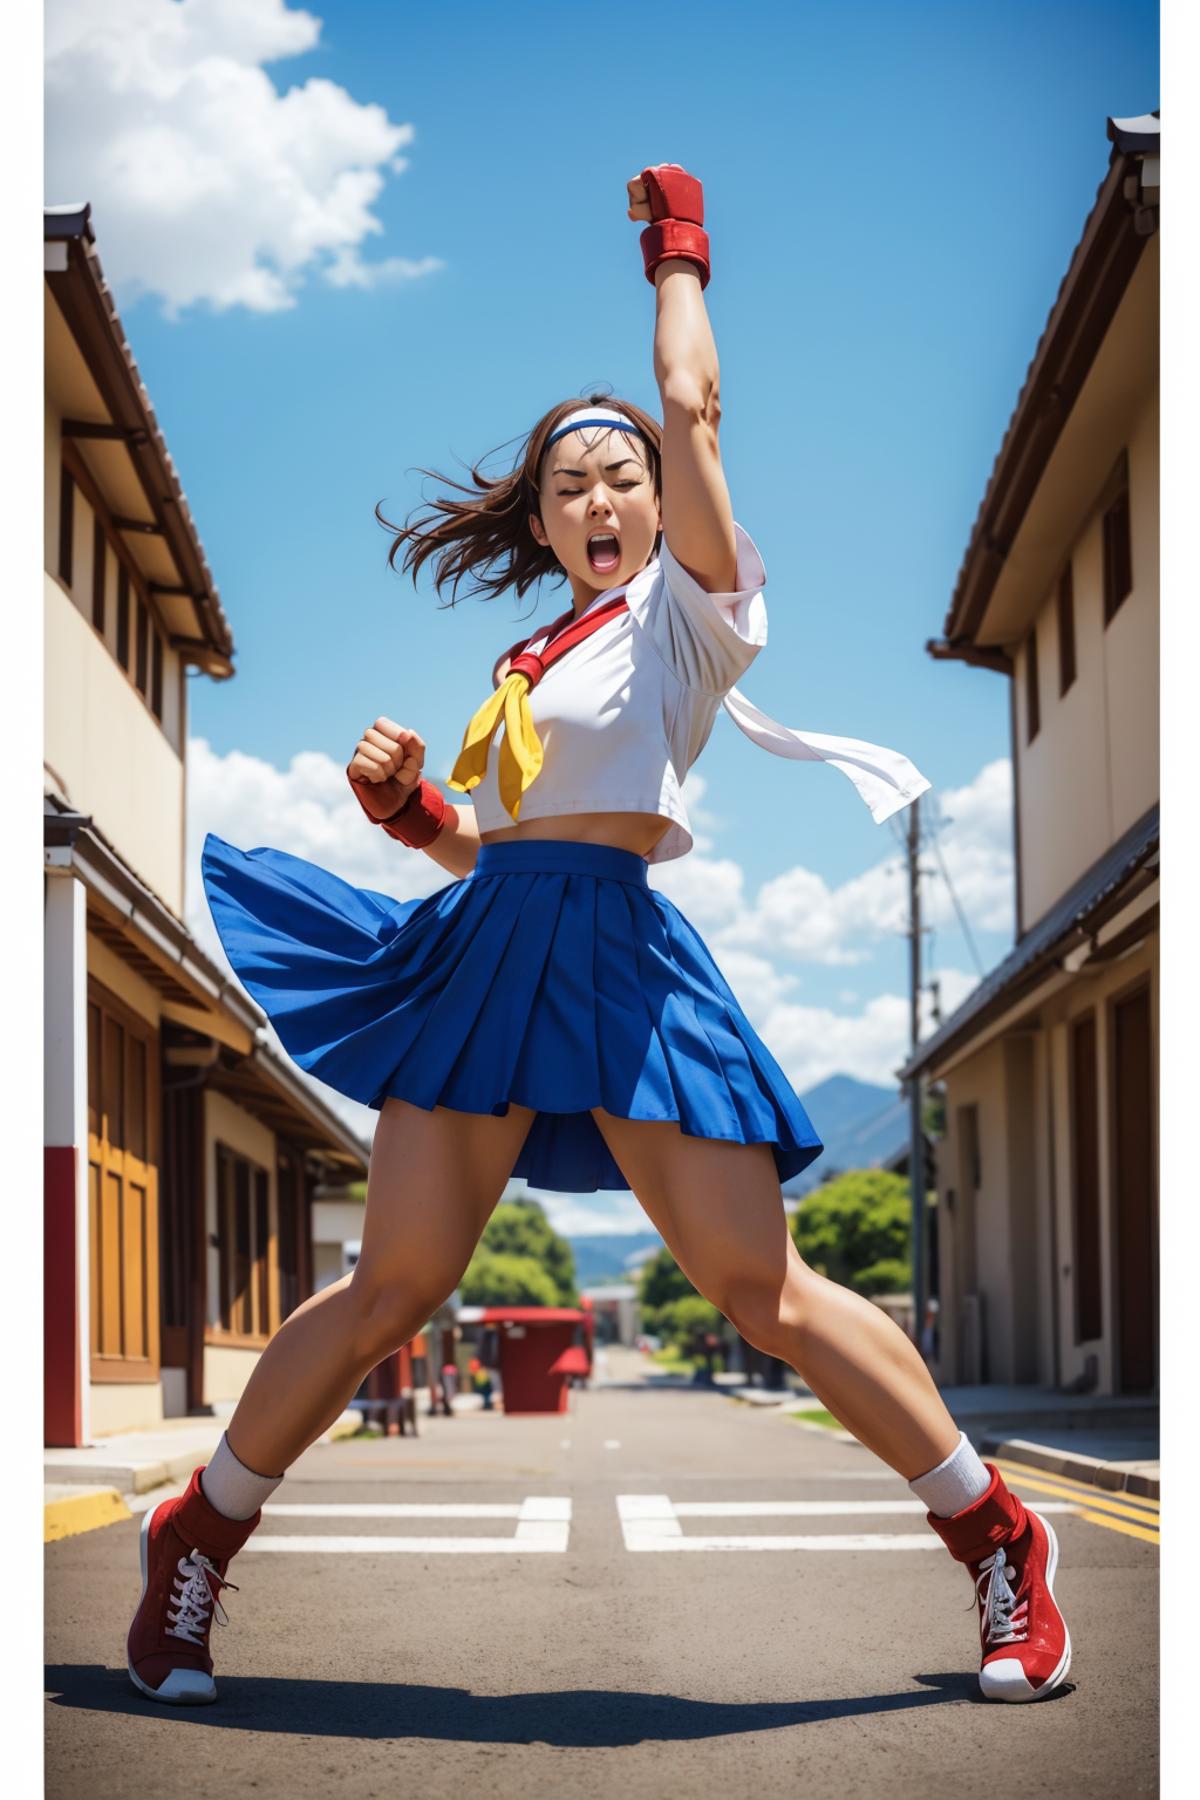 Sakura - Street Fighter (SF5/SF4 face) (Classic attire) image by WilliamTRiker